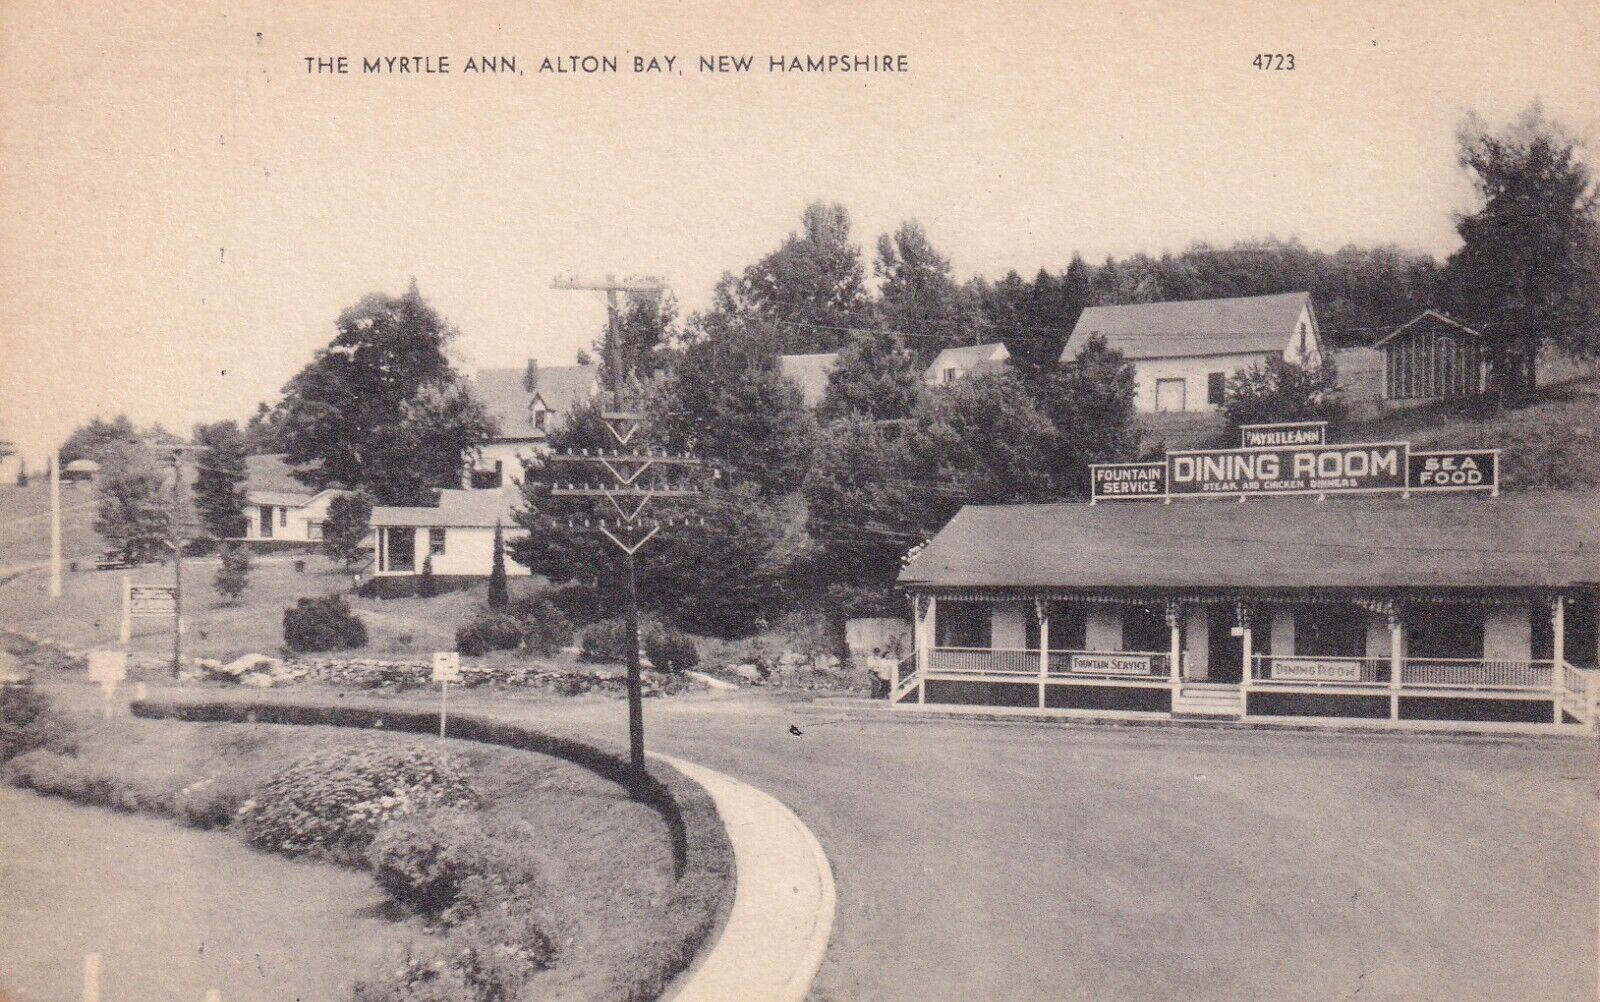 Vintage Myrtle Ann Dining Room Restaurant Alton Bay New Hampshire Postcard 1940s